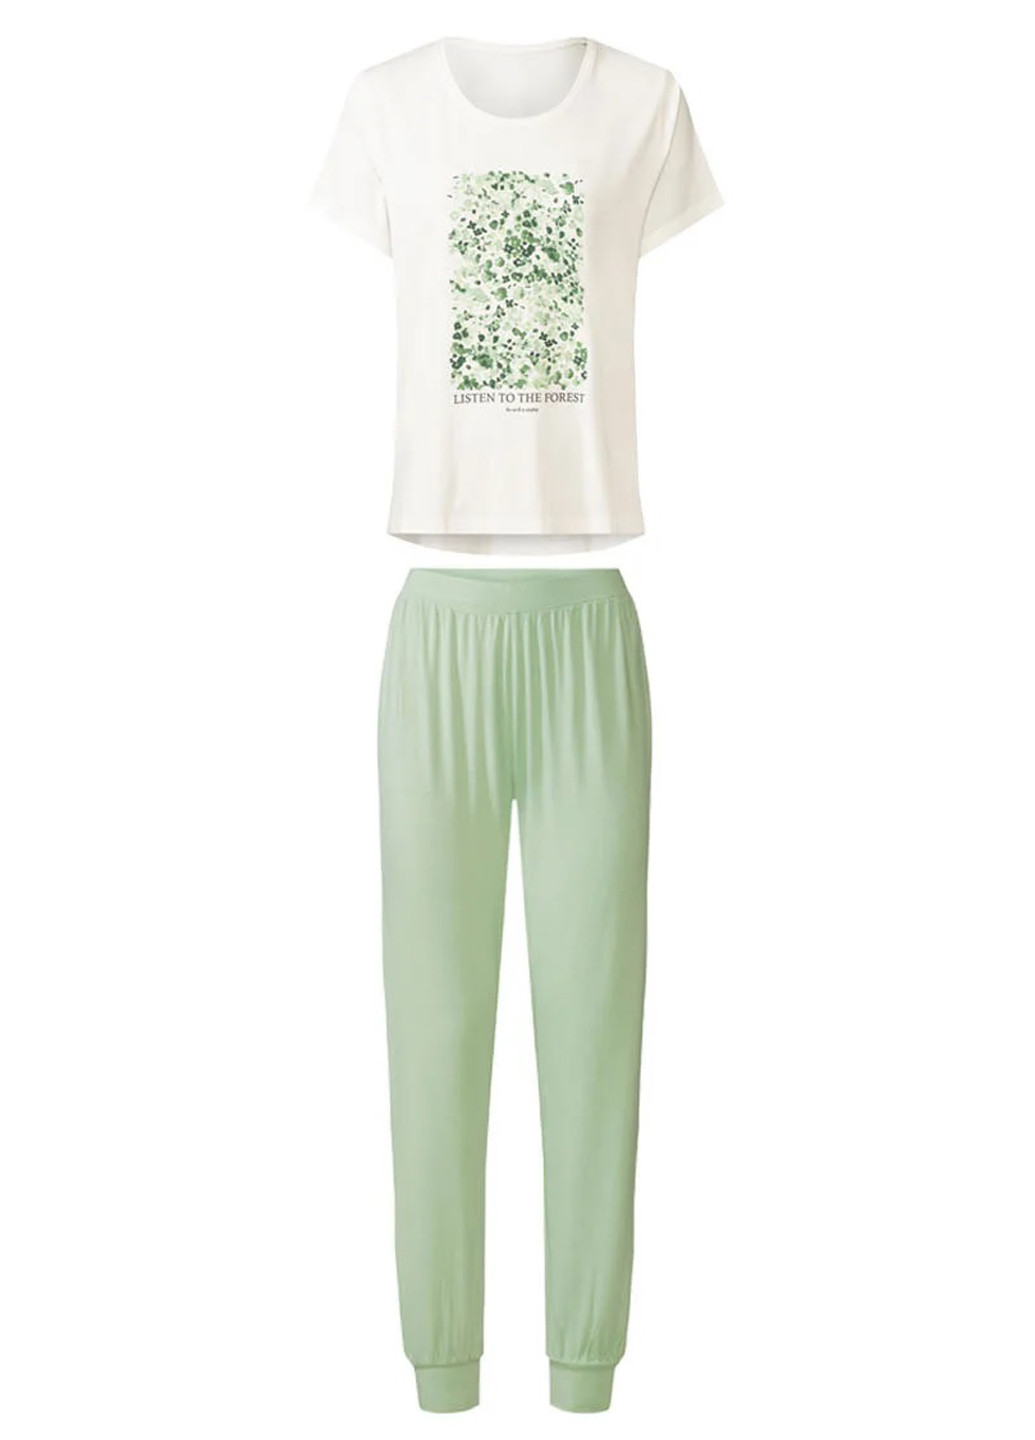 Салатовая всесезон пижама (футболка, брюки) футболка + брюки Esmara